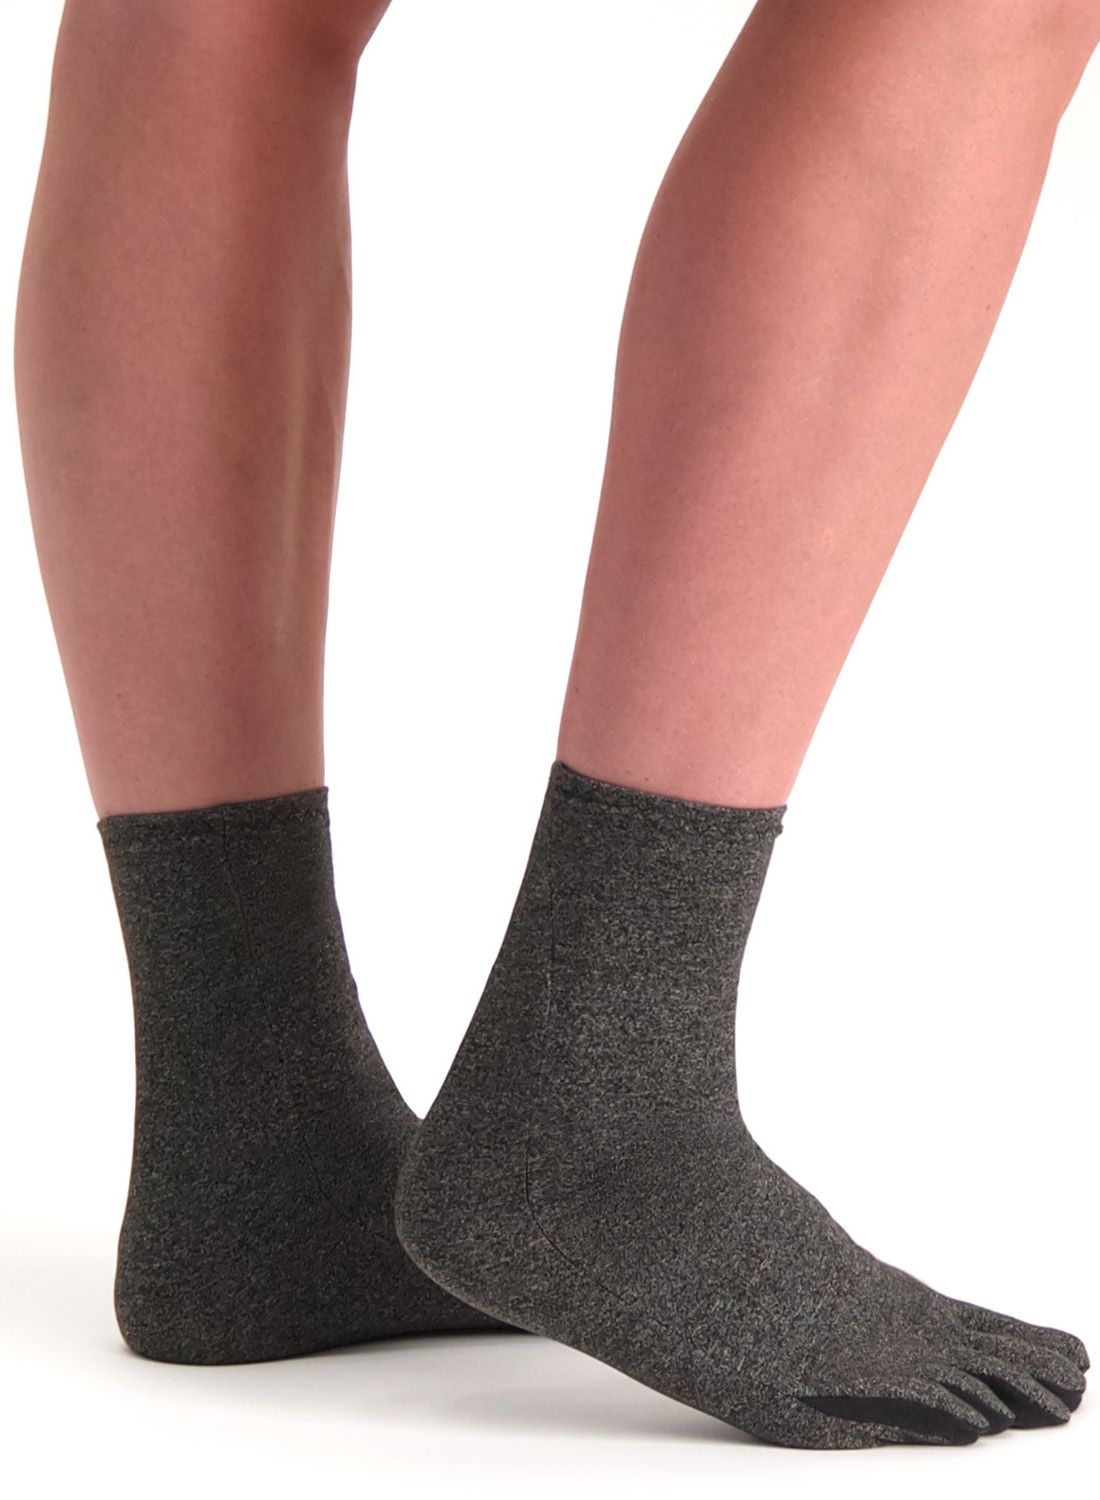 medidu rheumatoid arthritis osteoarthritis socks for sale